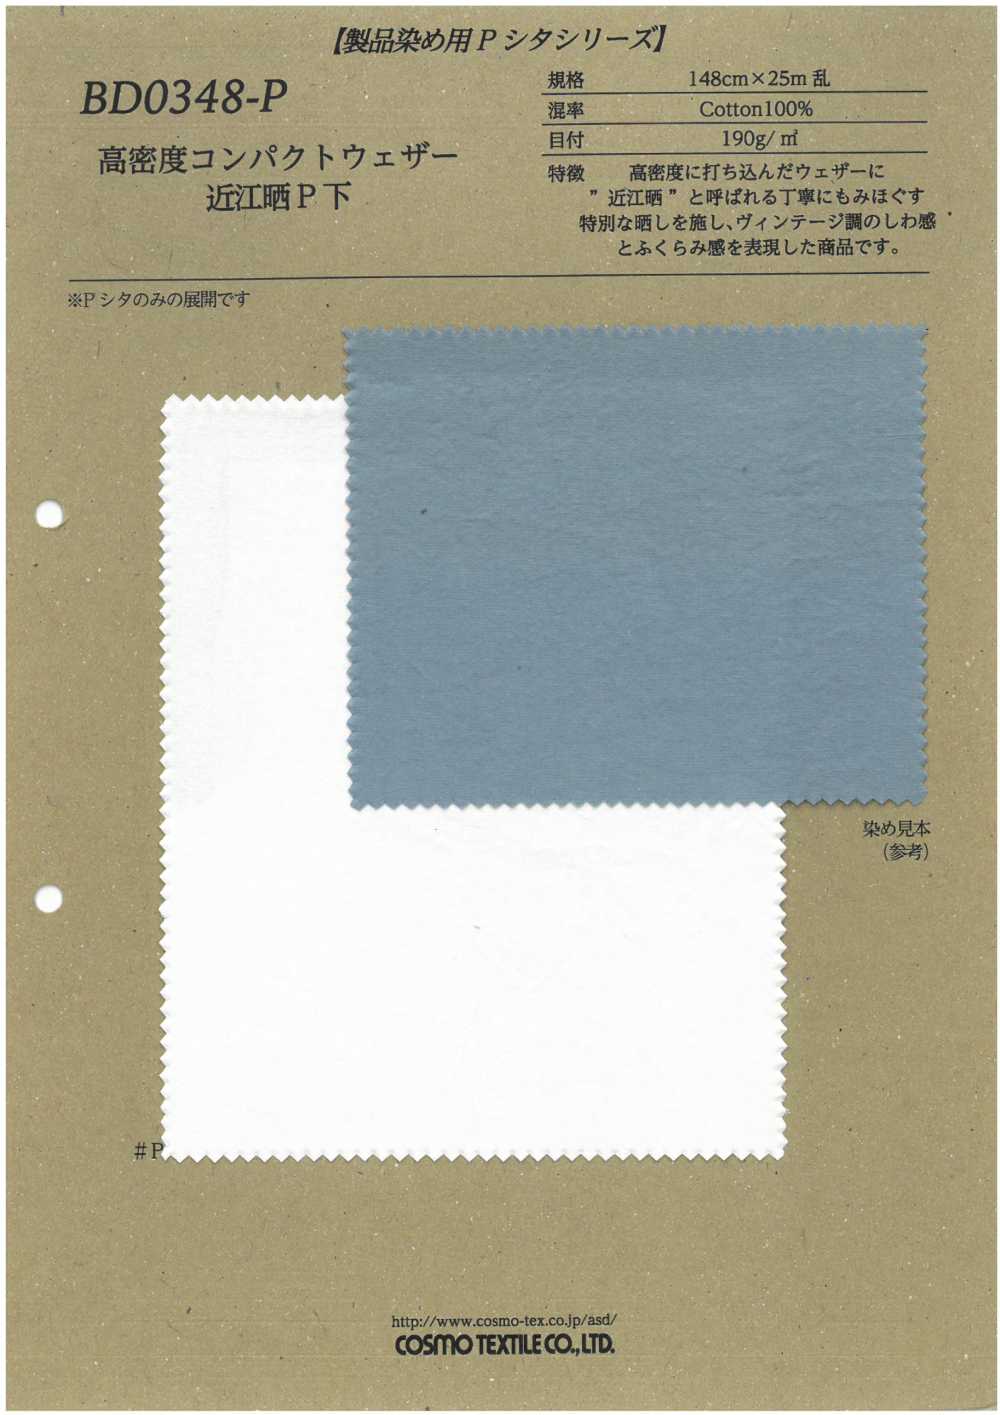 BD0348-P Hochdichtes, Kompaktes Wettertuch Omi Bleached P Bottom[Textilgewebe] COSMO TEXTILE